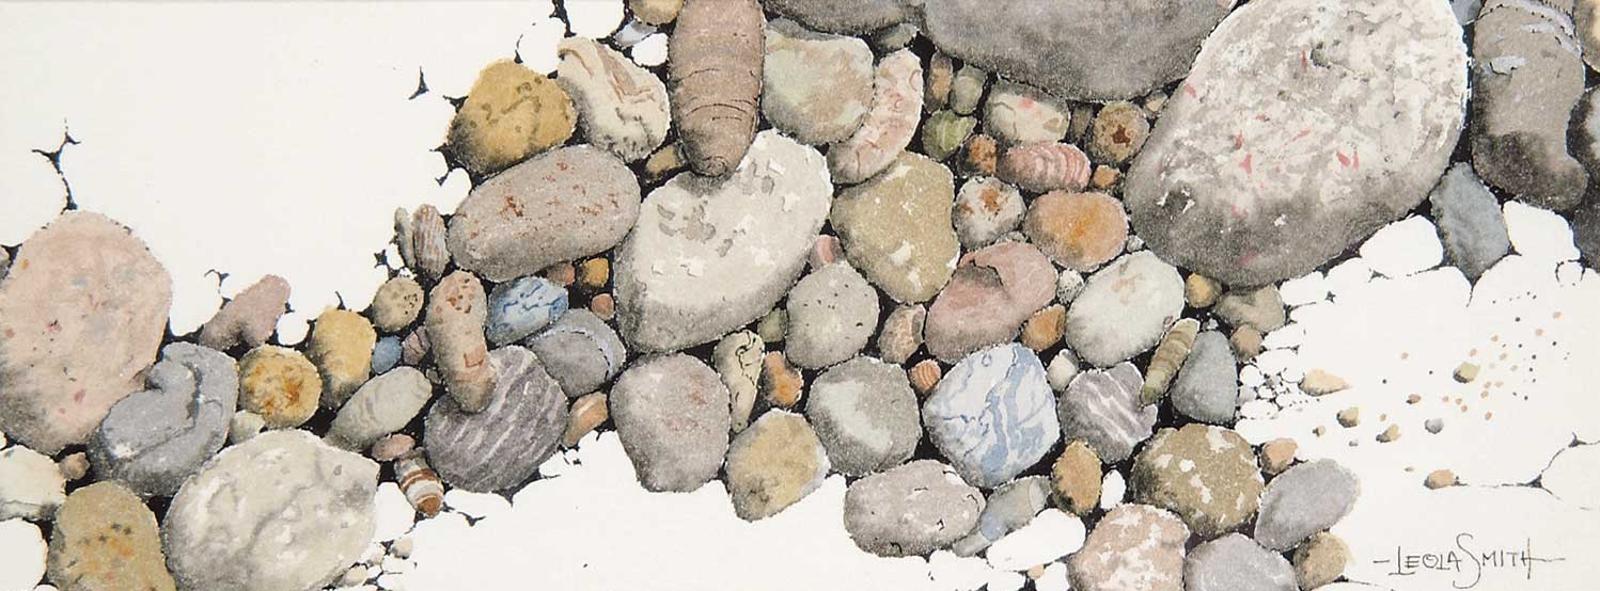 Leola Smith - Untitled - River Rocks